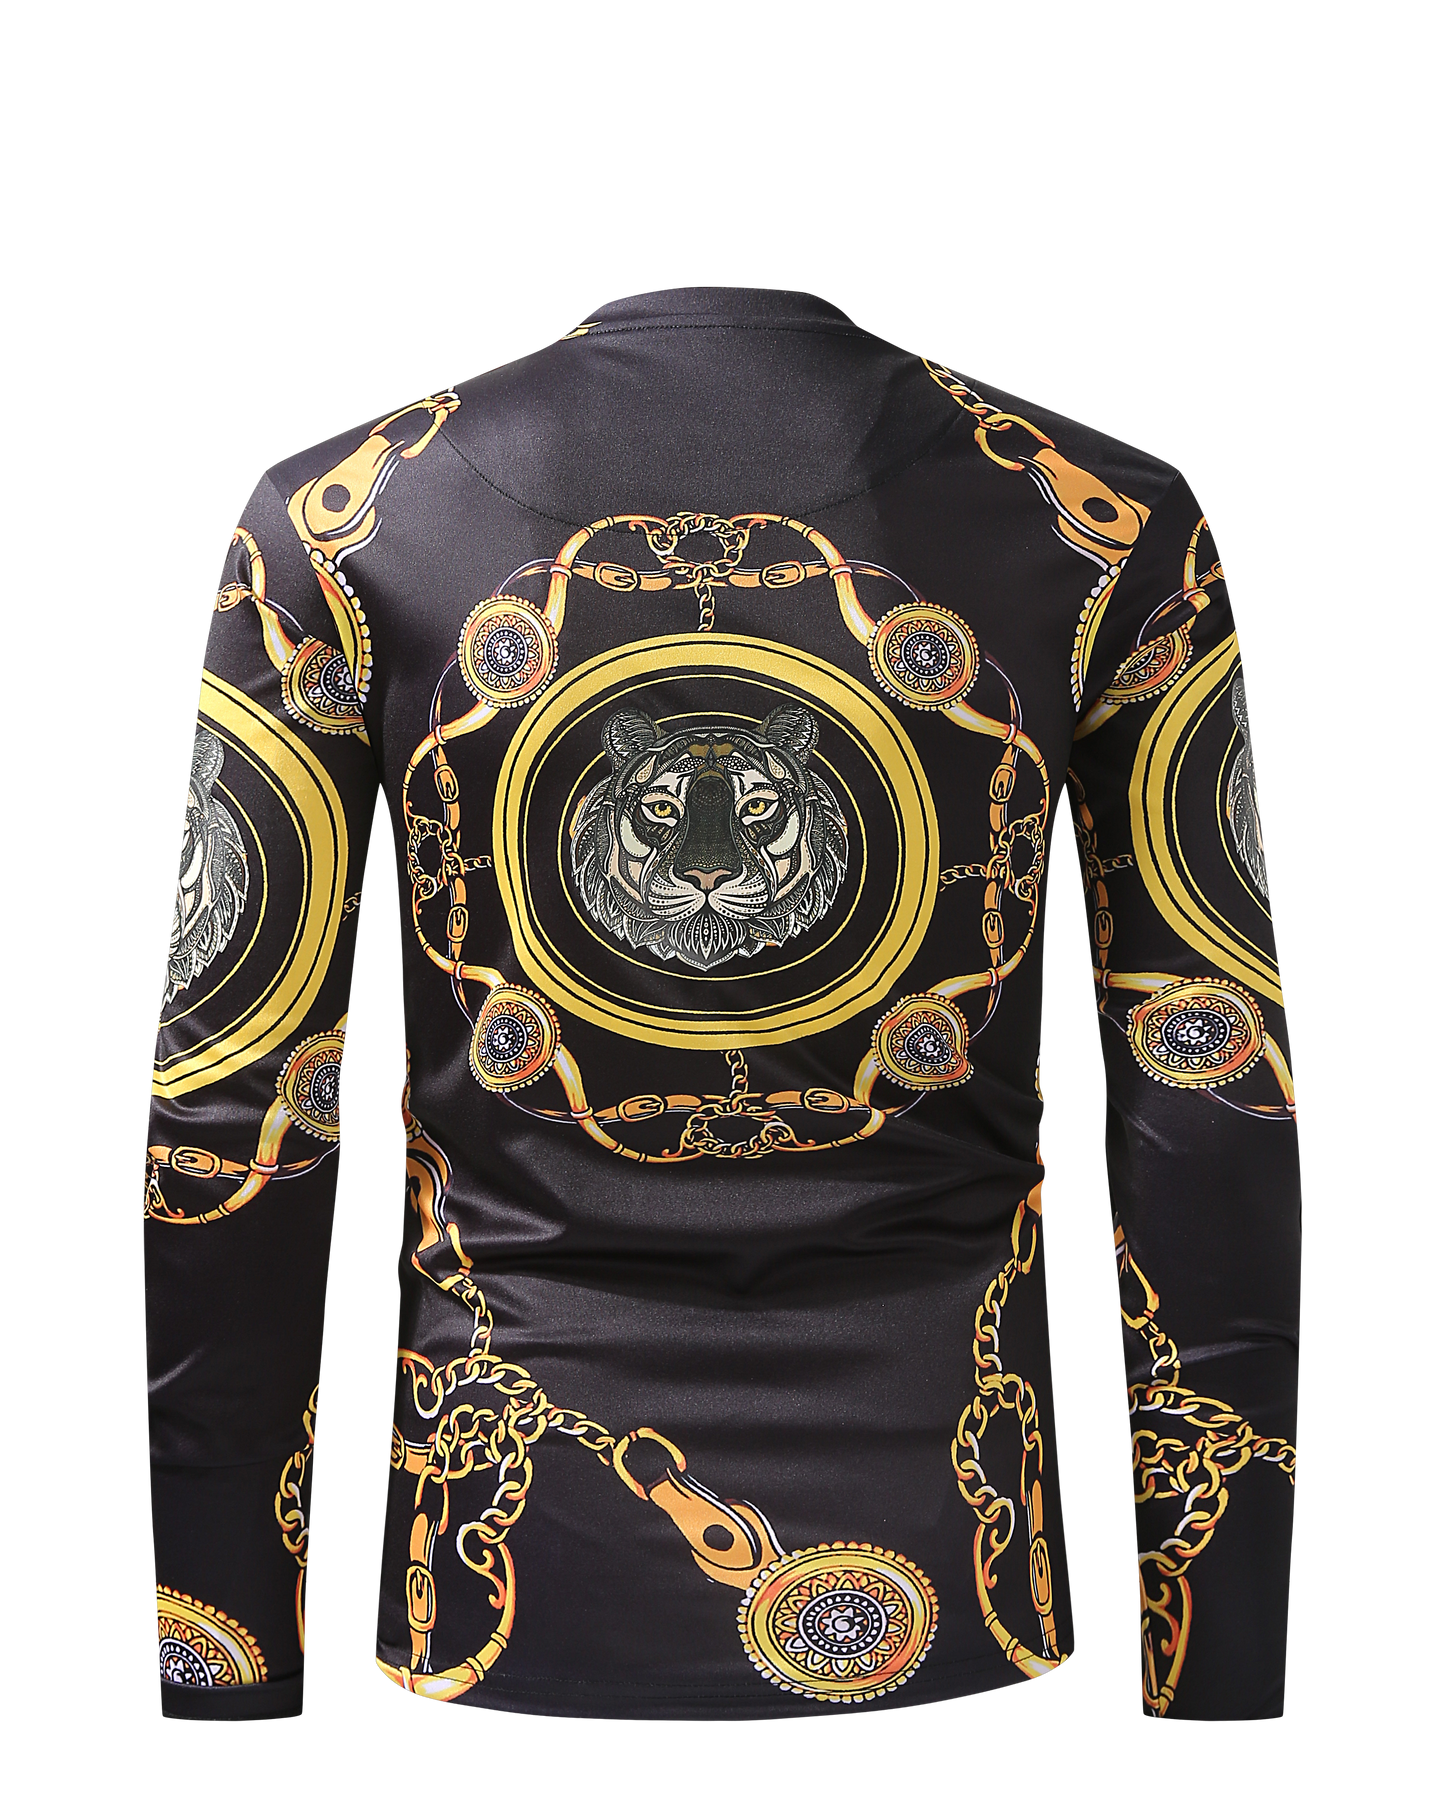 Men PREMIERE SLIM FIT Long Sleeve T SHIRT BLACK GOLD KING LION CHAIN PRINT Designer Shirt